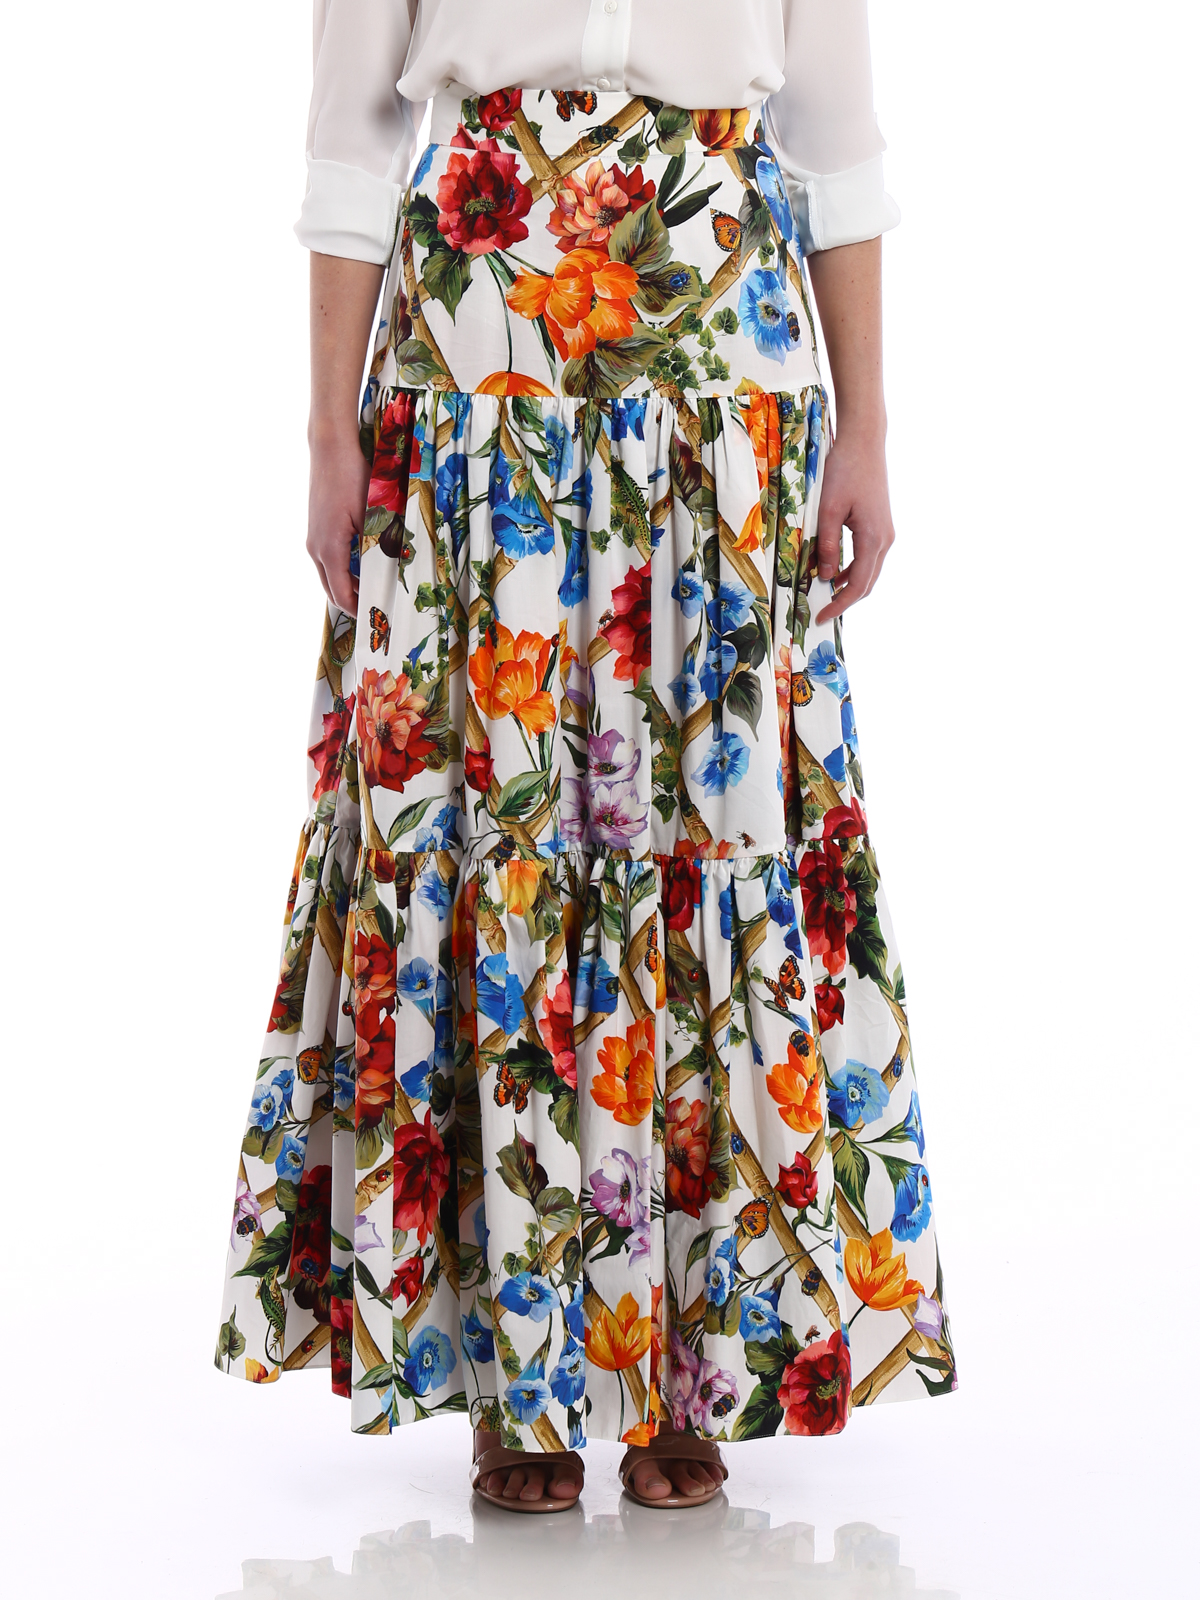 dolce gabbana floral skirt